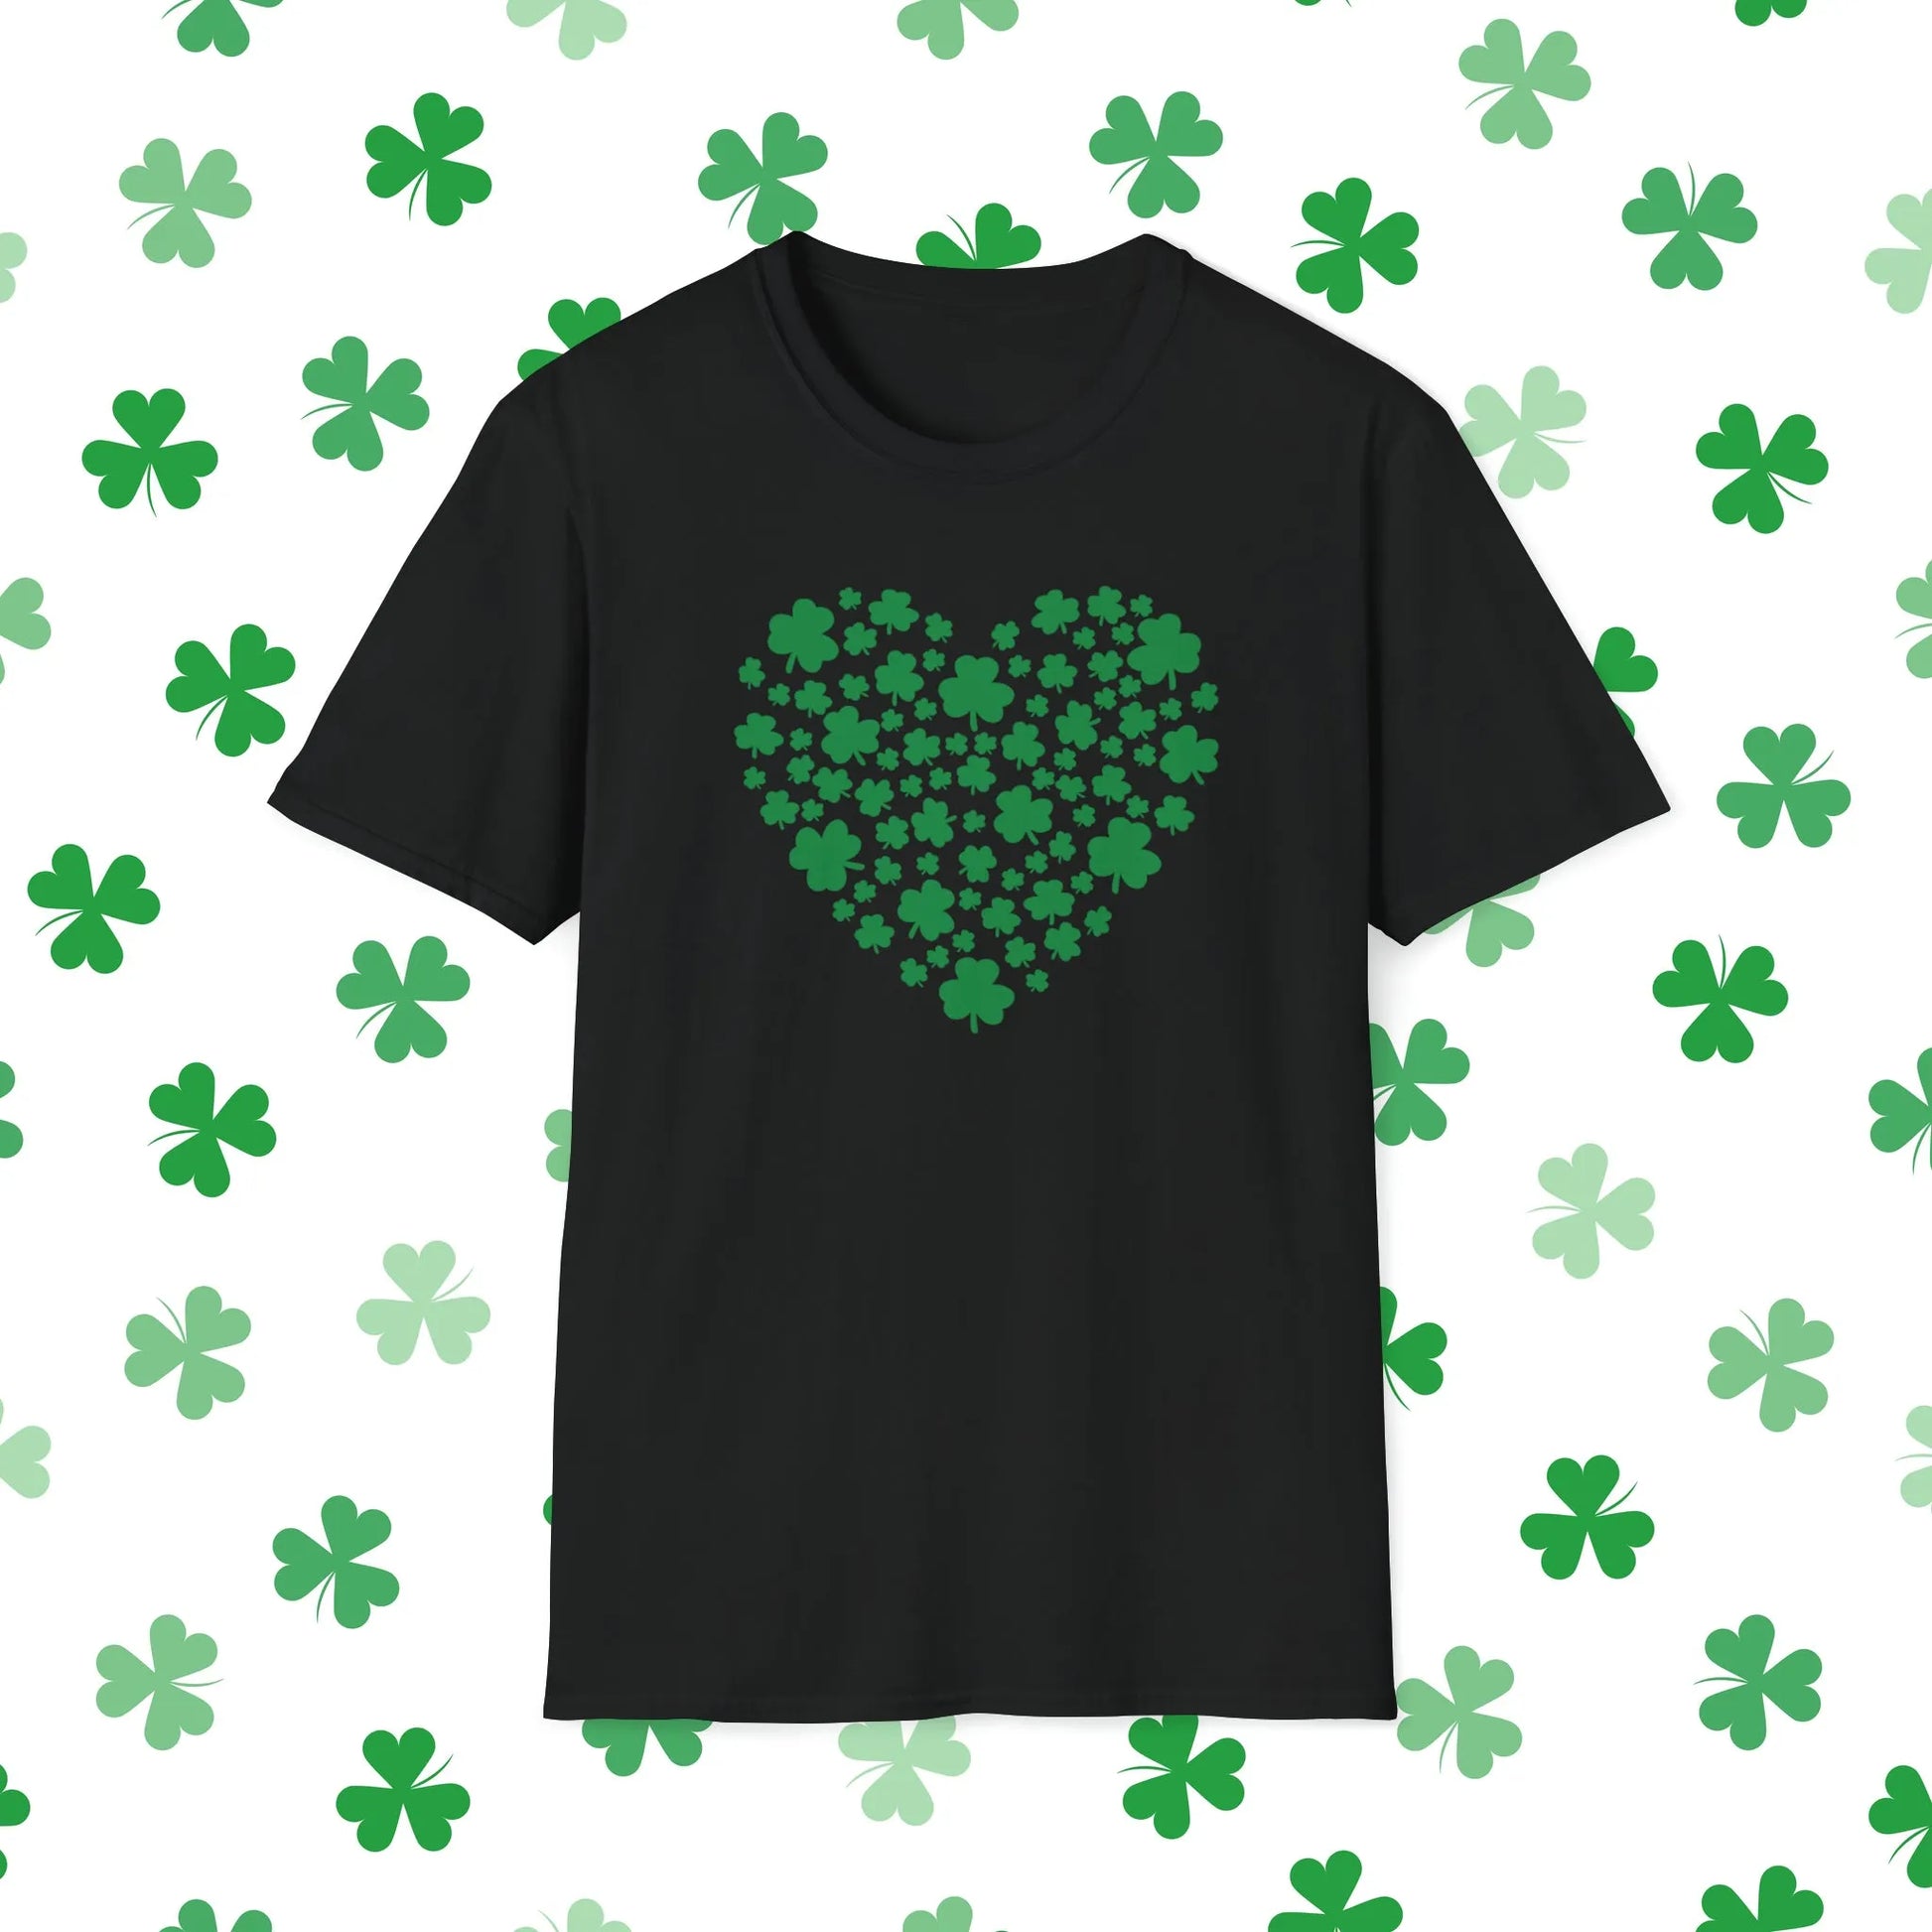 Heart of Shamrocks St. Patrick's Day T-Shirt - Comfort & Charm - Heart of Shamrocks Shirt Black Front